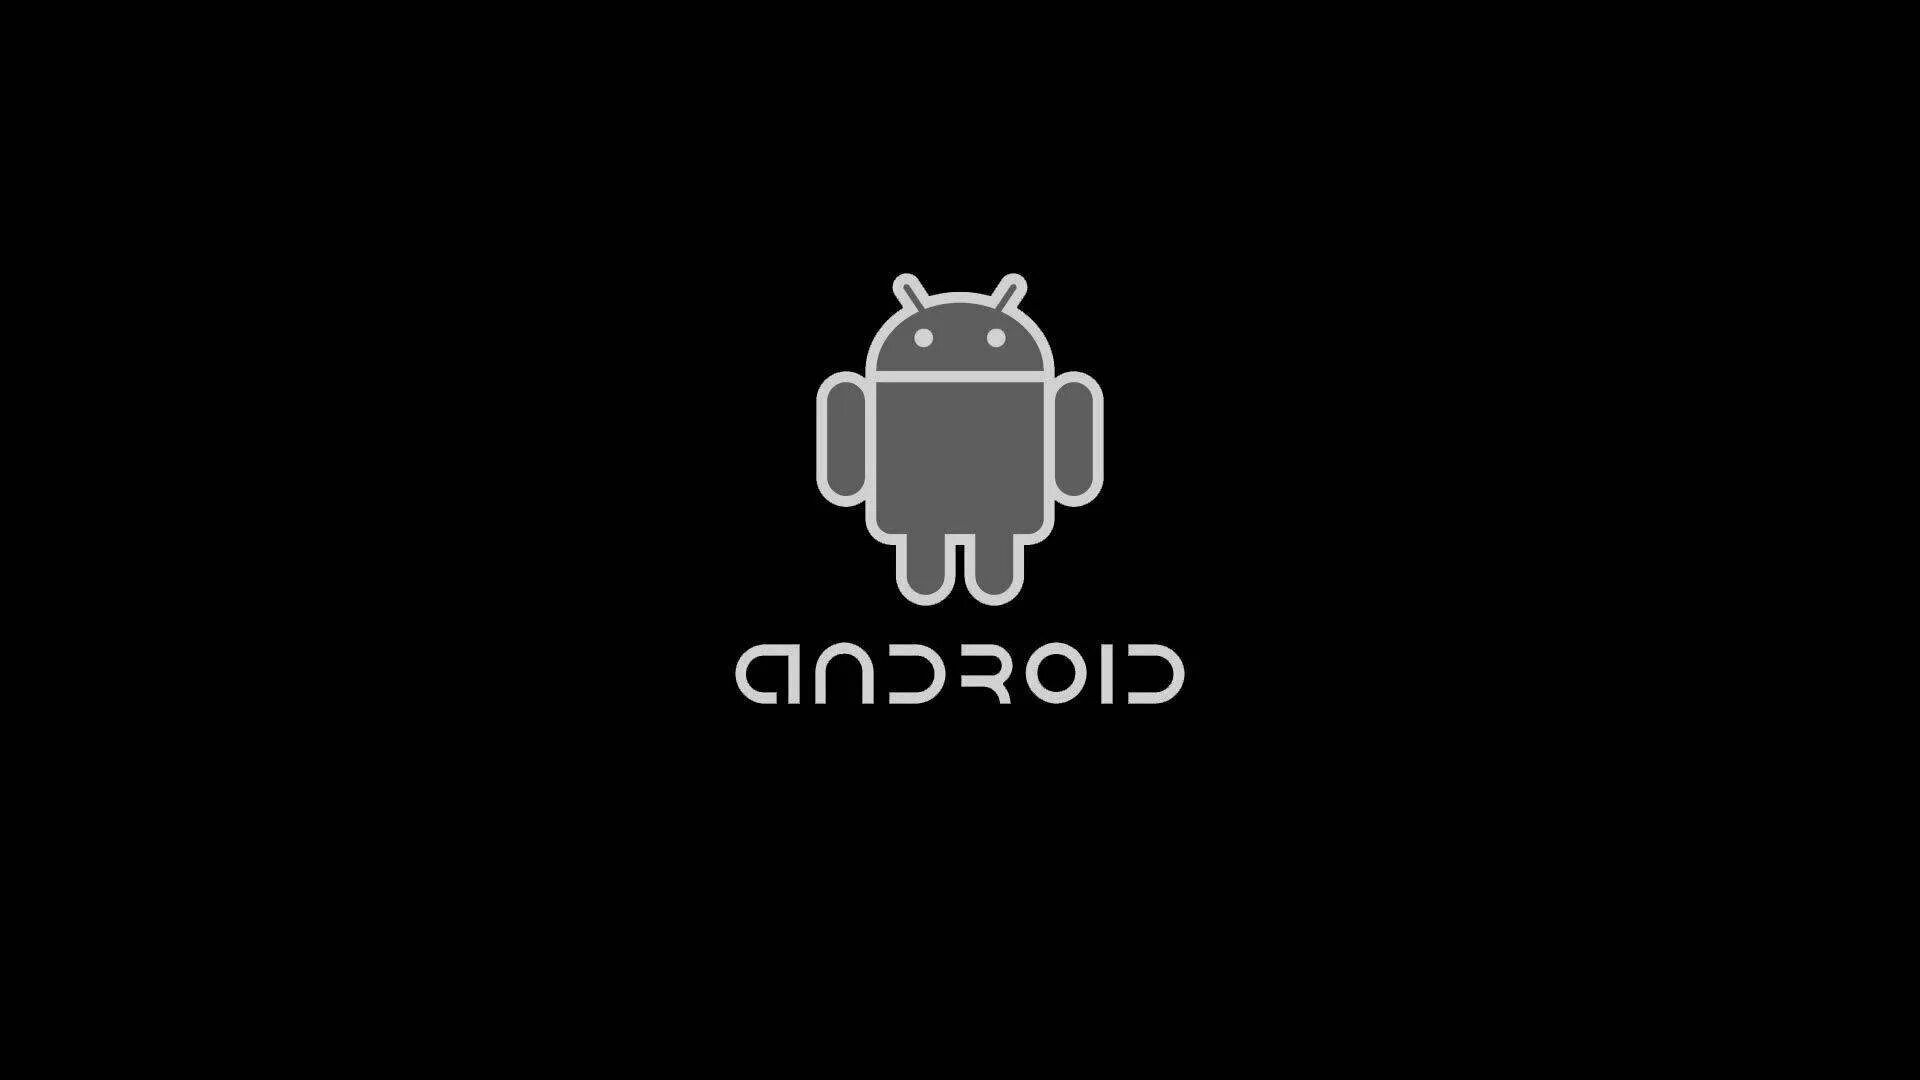 Обои андроида 10. Логотип андроид. Логотип андроид на черном фоне. Черный фон на андроид. Обои с логотипом андроид.